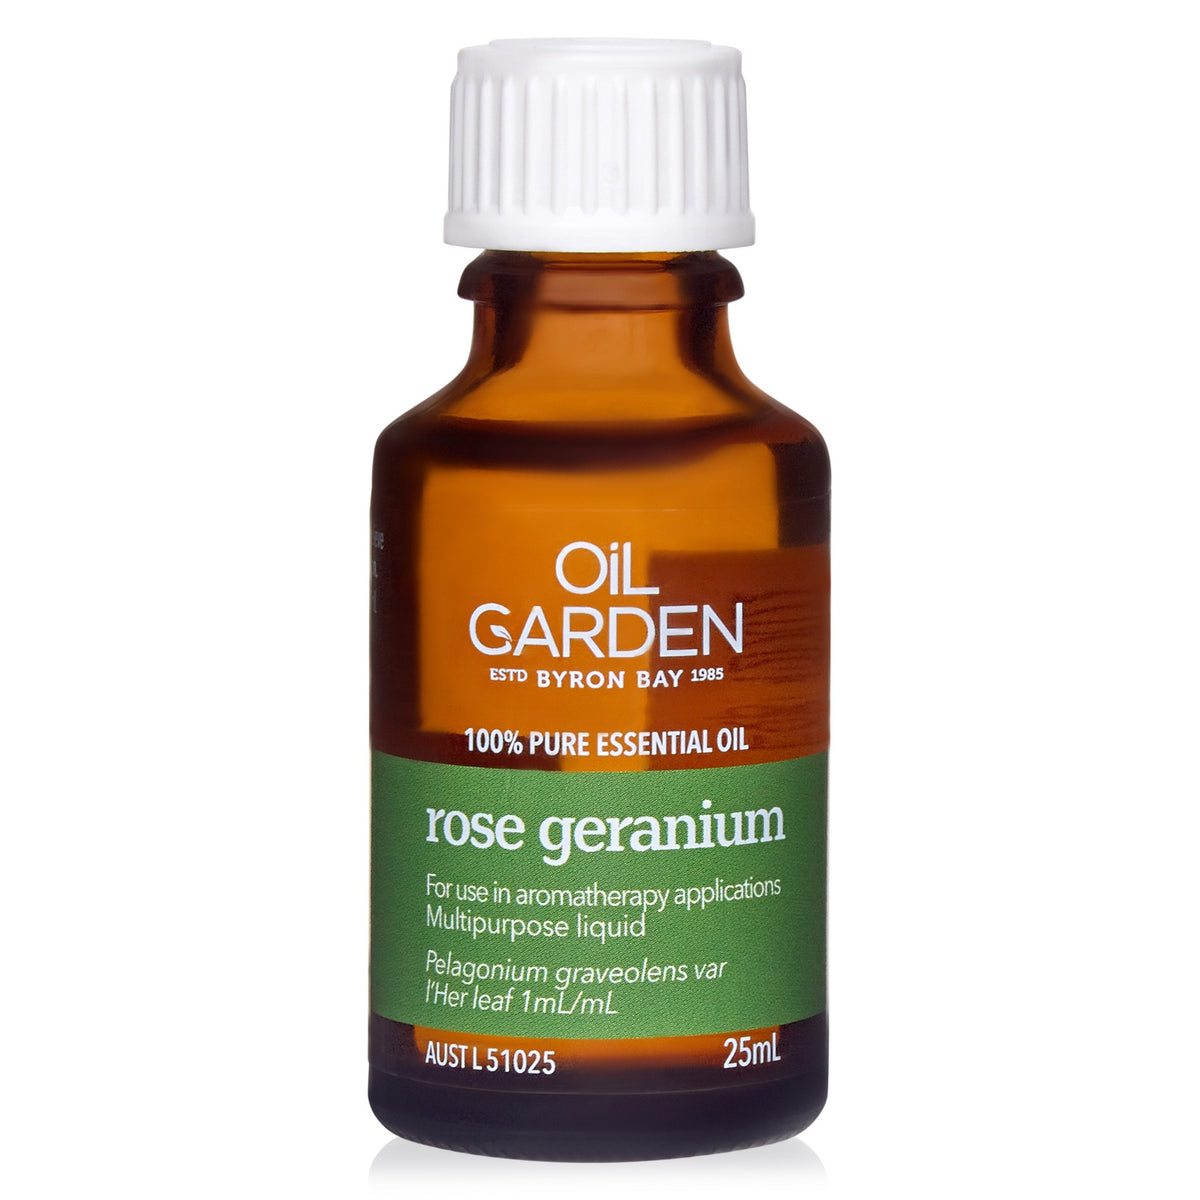 Oil Garden Aromatherapy Rose Geranium Oil 25ml